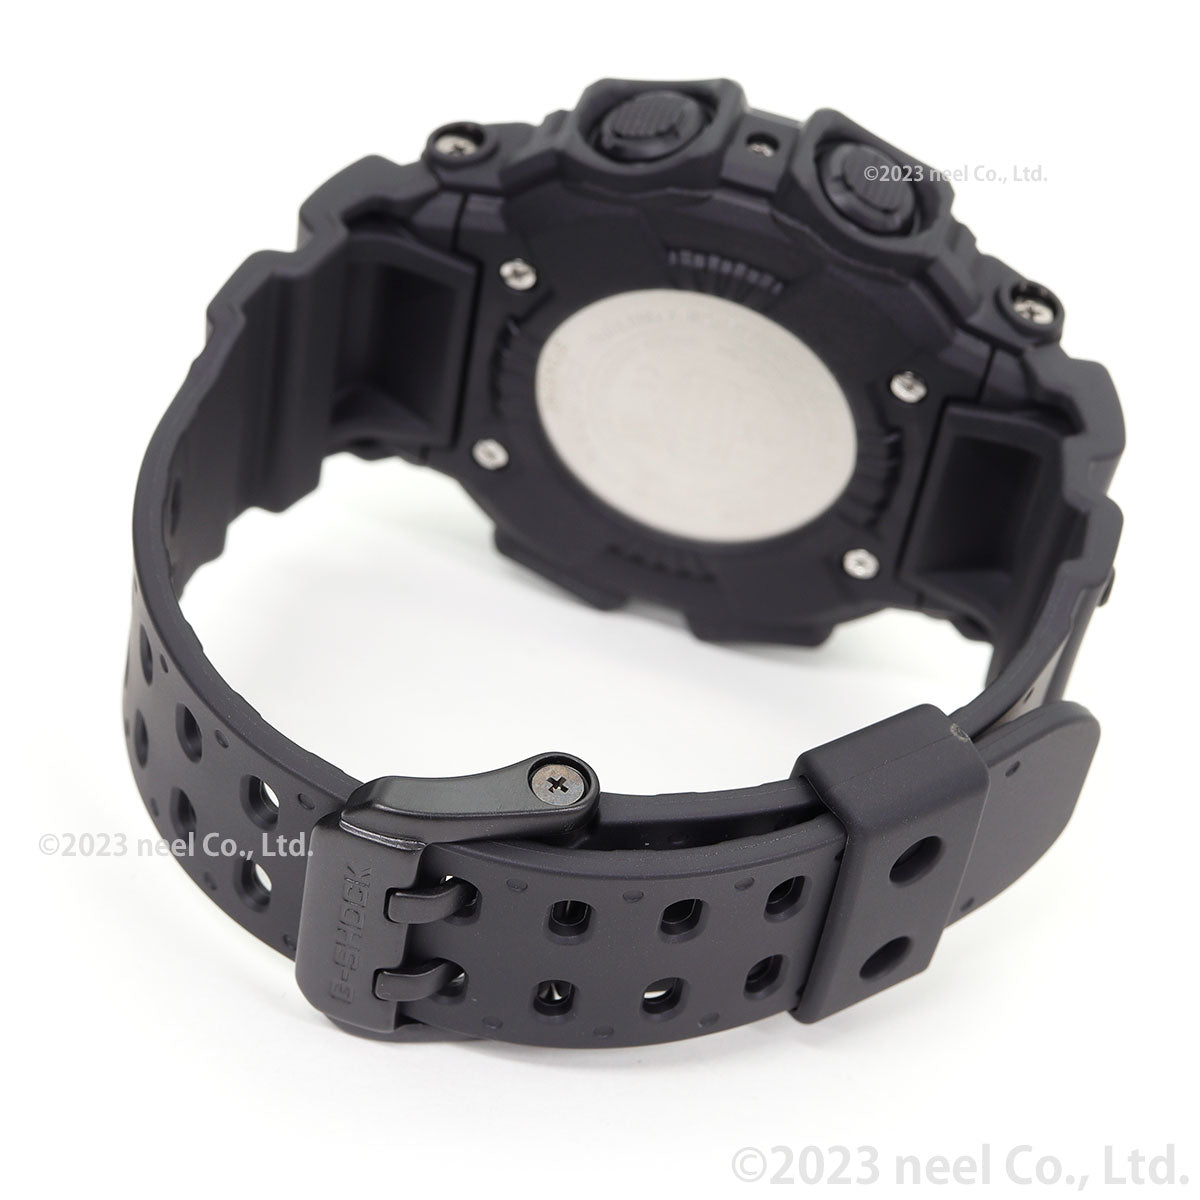 G-SHOCK 電波 ソーラー 電波時計 ブラック タフソーラー 腕時計 メンズ デジタル GXW-56BB-1JF